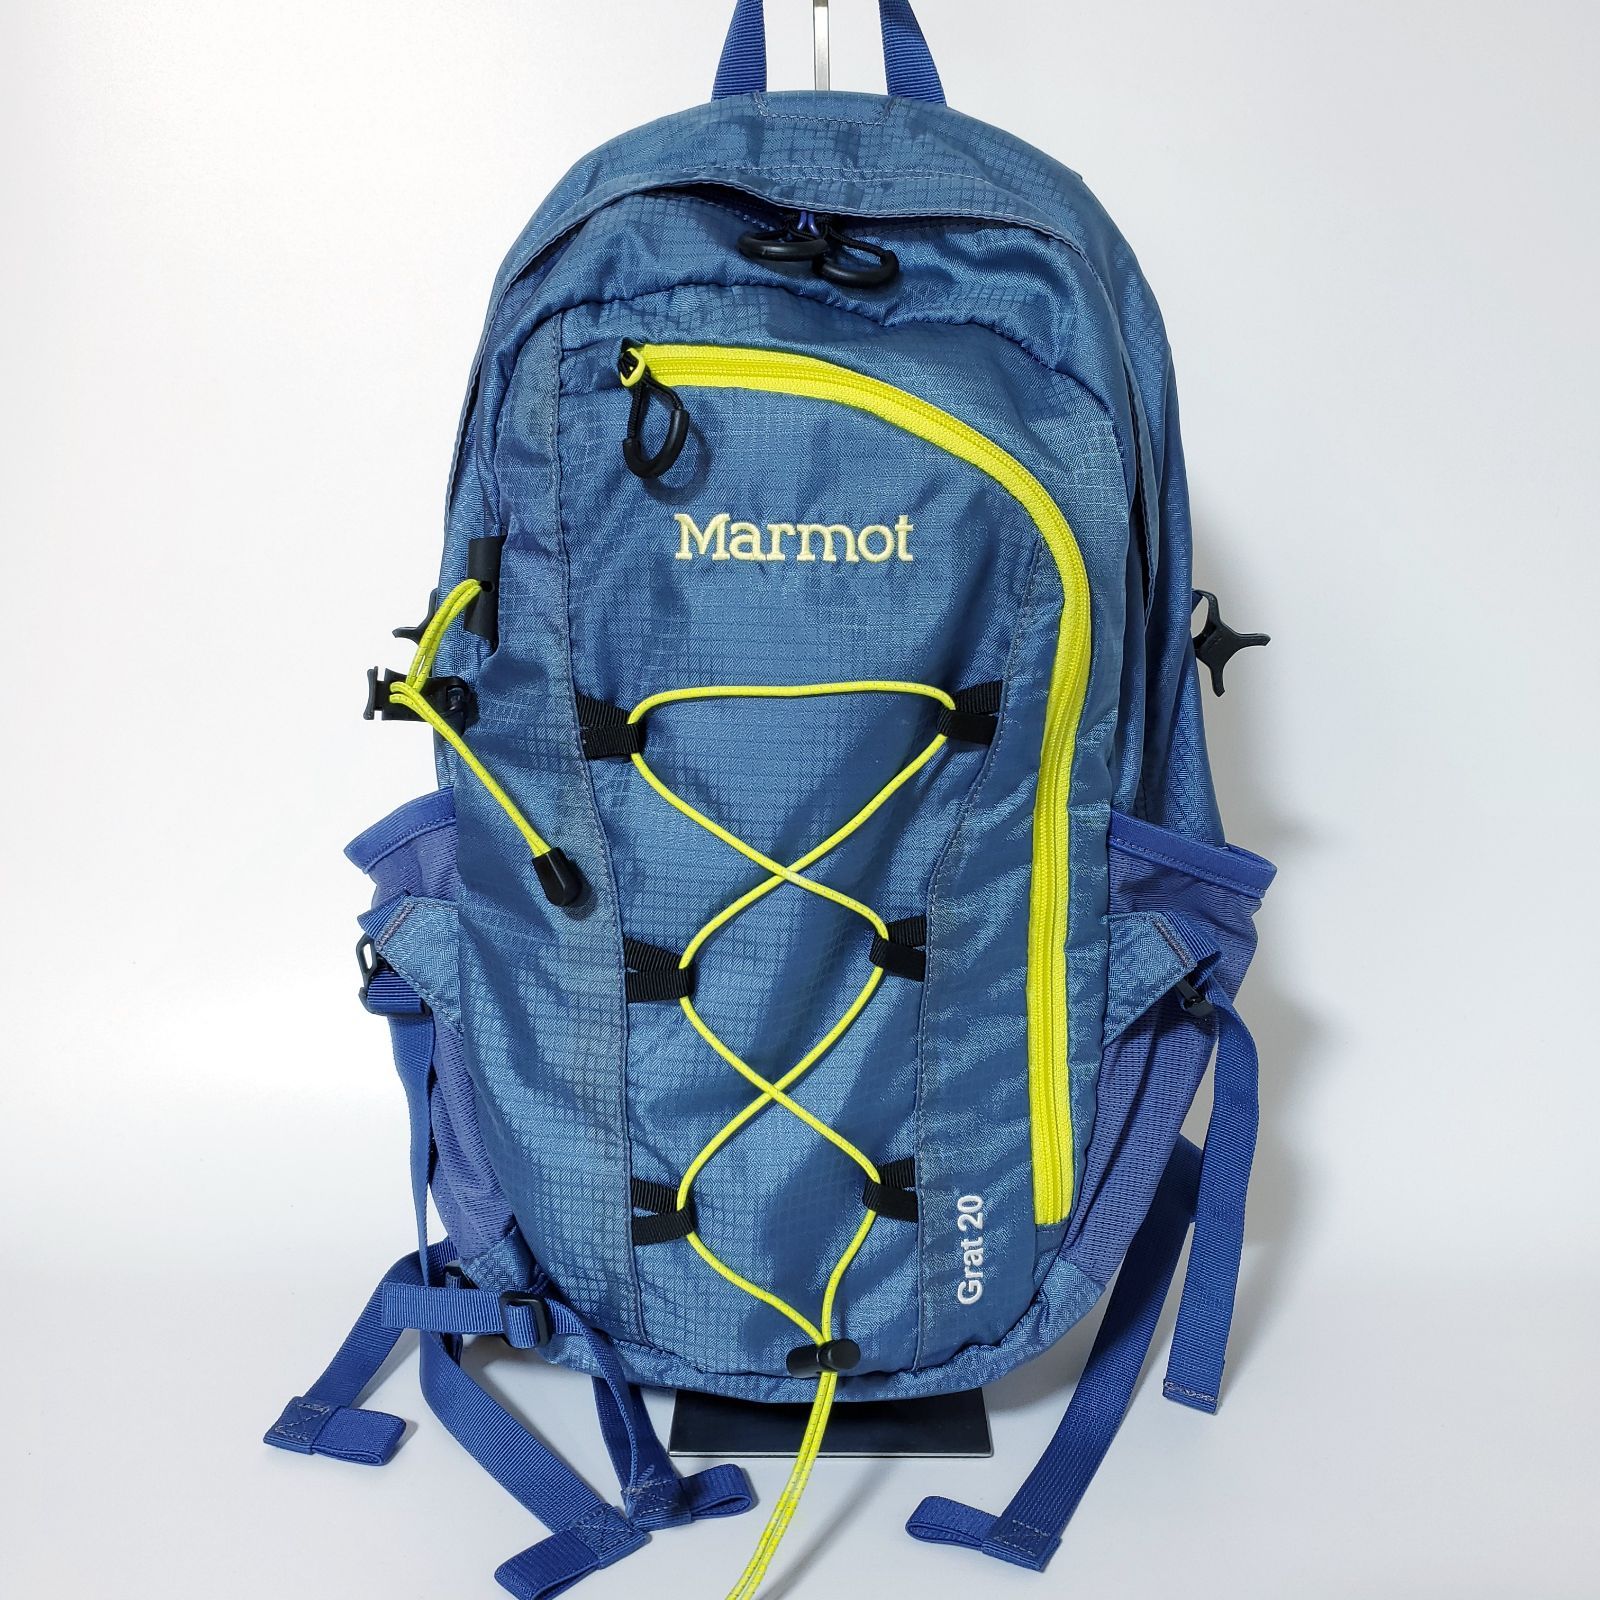 Marmot マーモット GRAT 20 MJB-S6304 20L アルパインパック リュック リュックサック バックパック ブルー イエロー